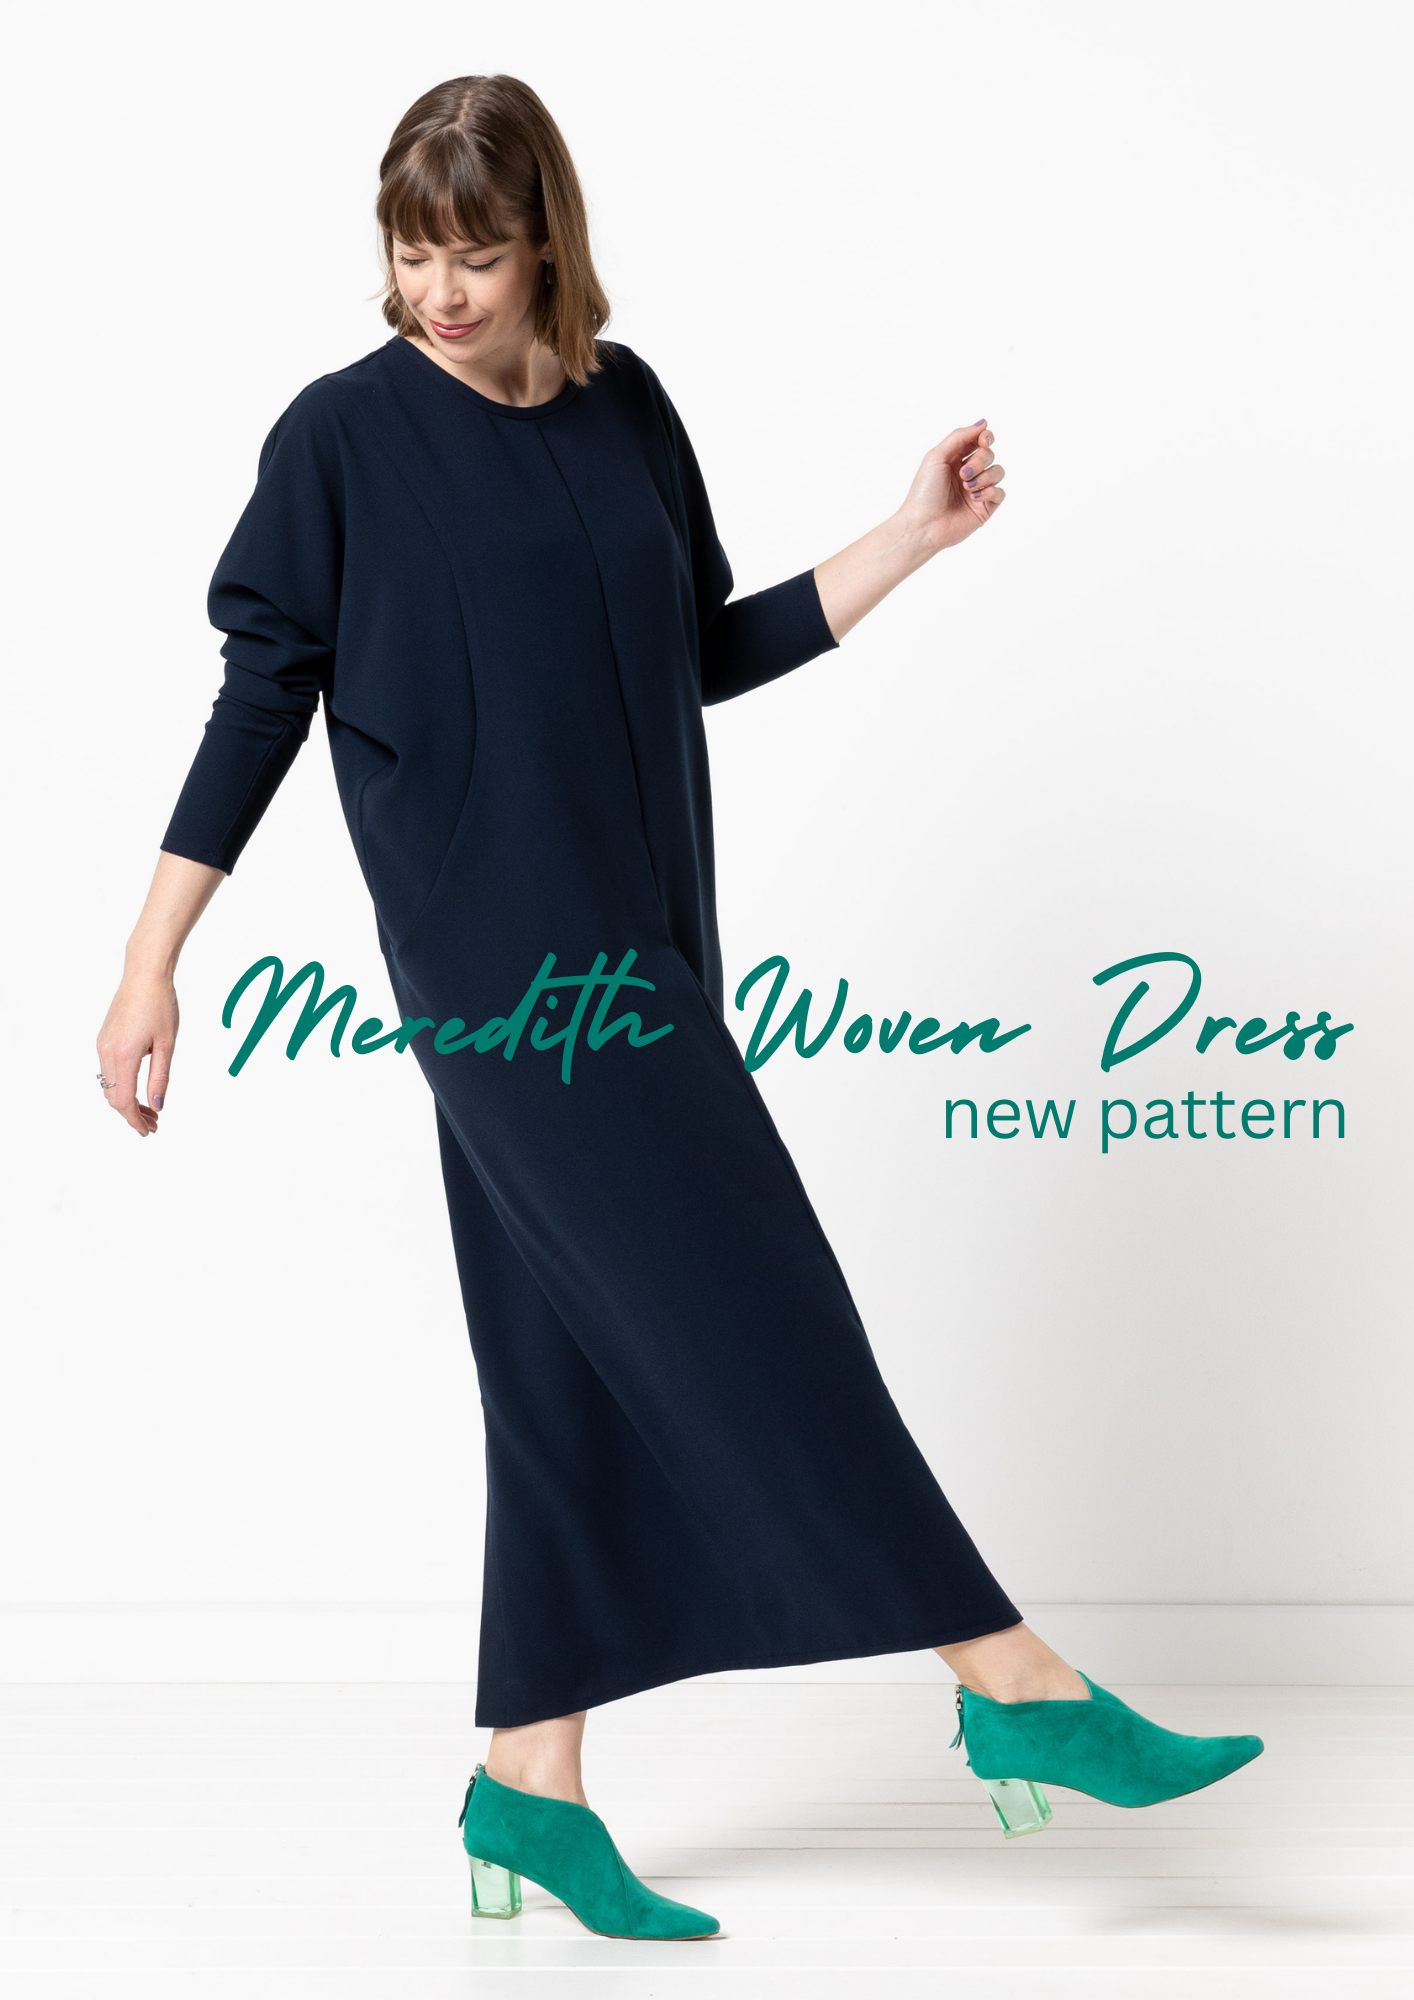 New Pattern - Meredith Woven Dress